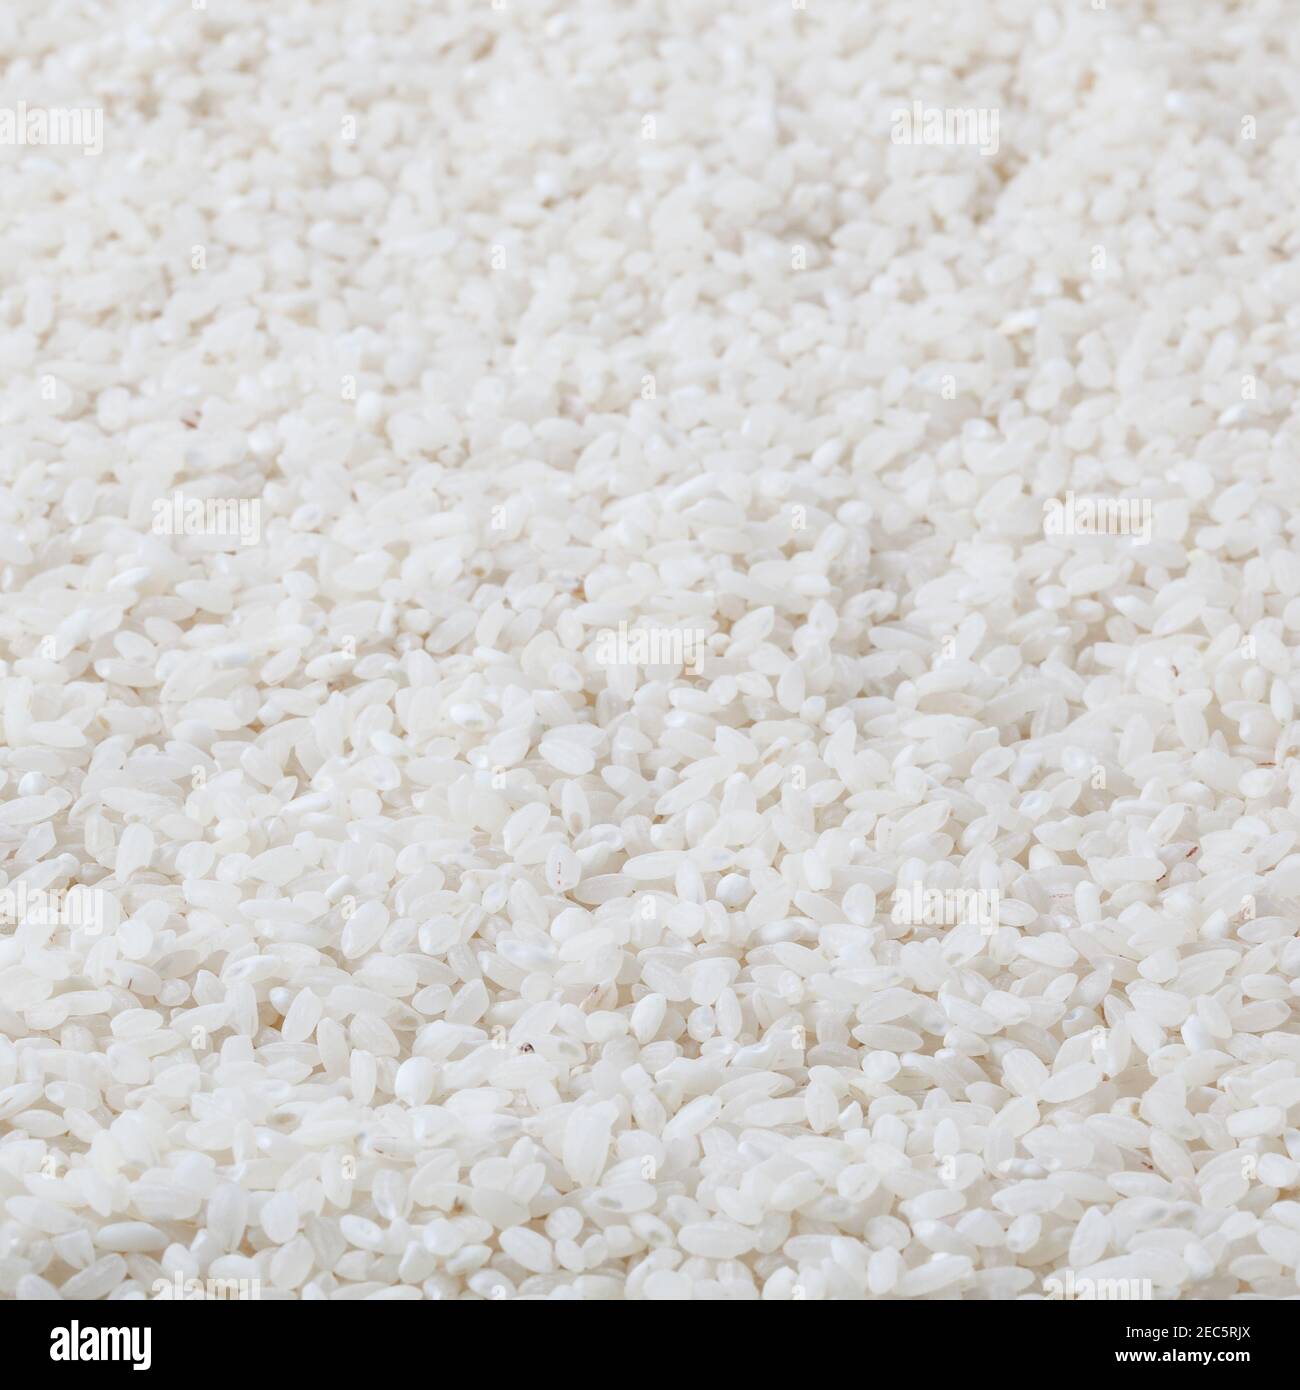 Uncooked round rice background Stock Photo - Alamy